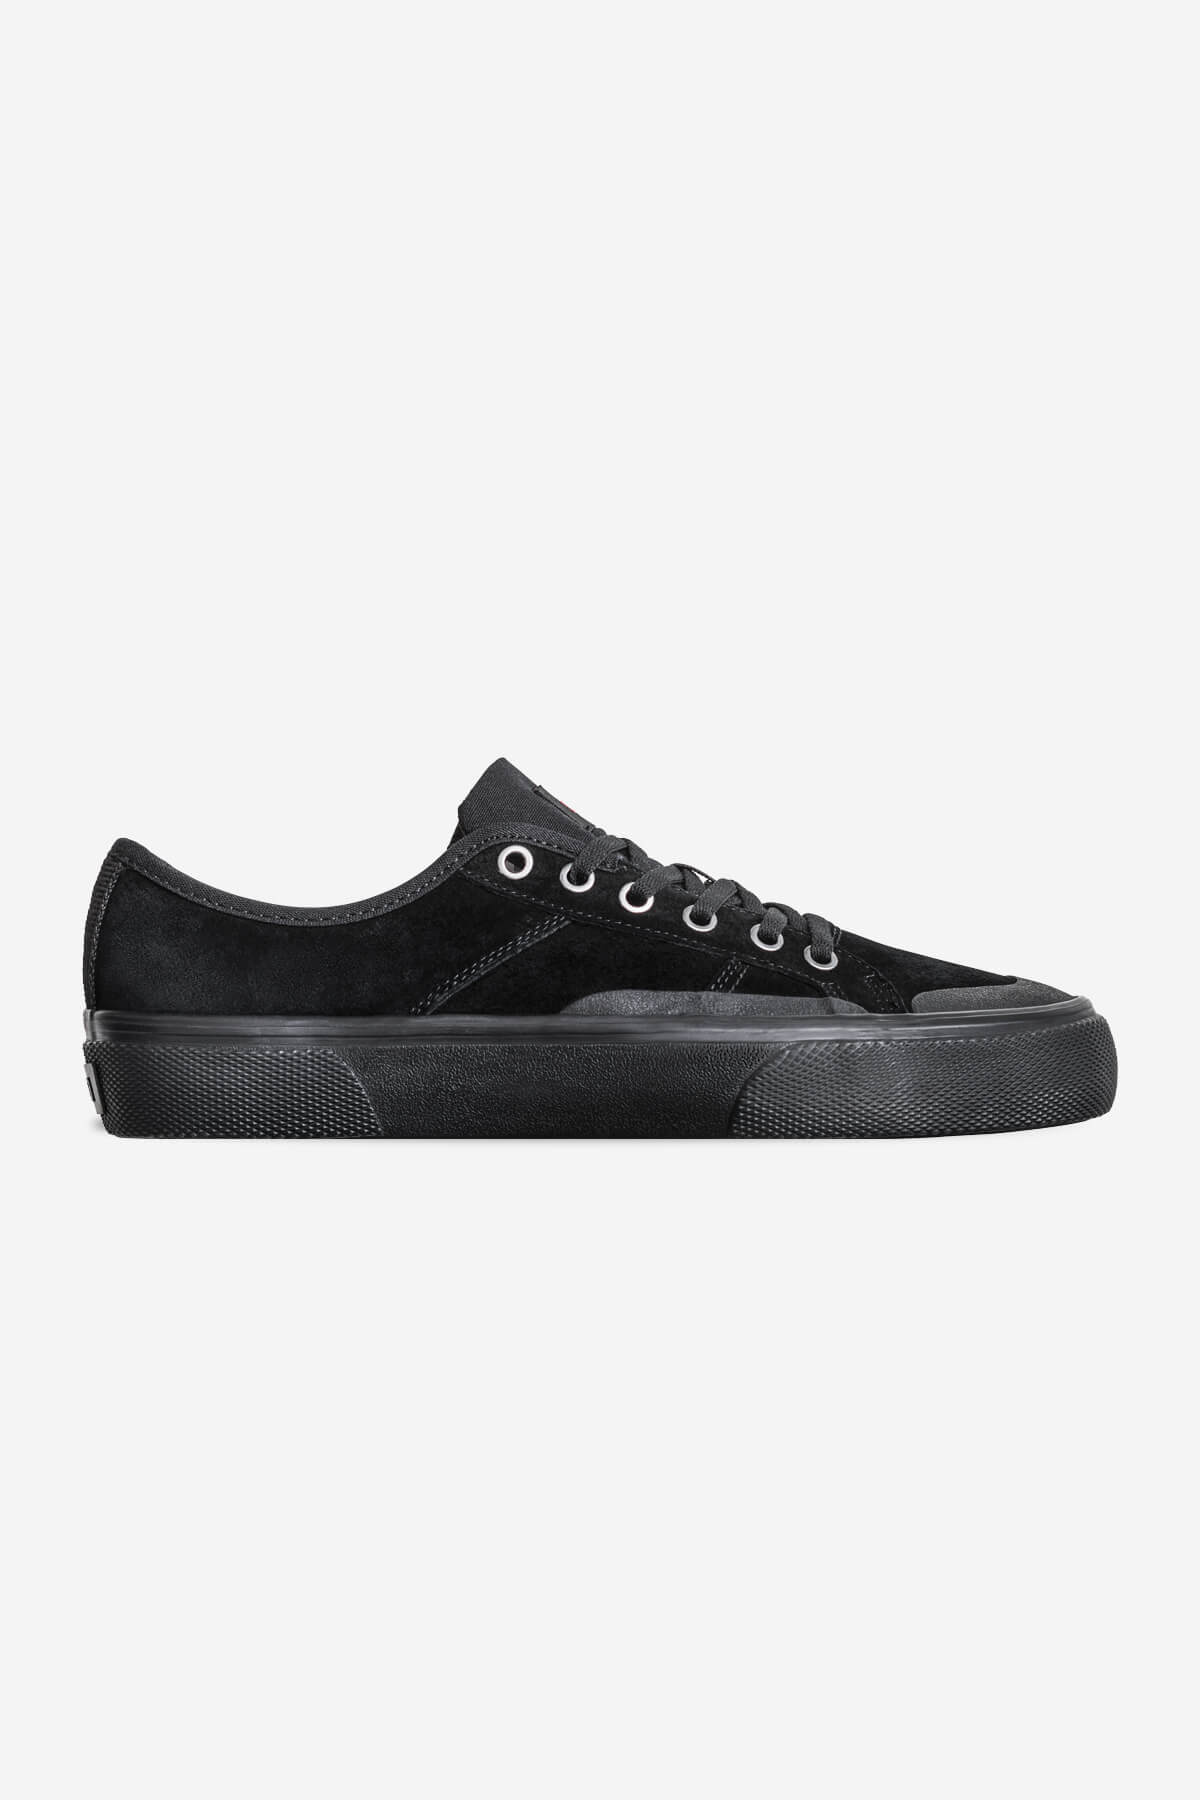 surplus black black wolverine skate shoes